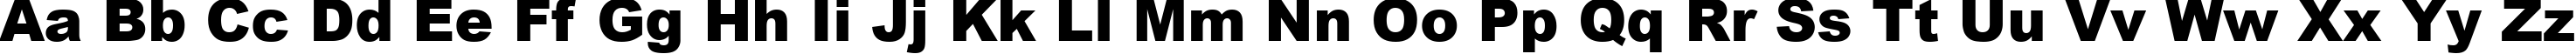 Пример написания английского алфавита шрифтом Arial Black